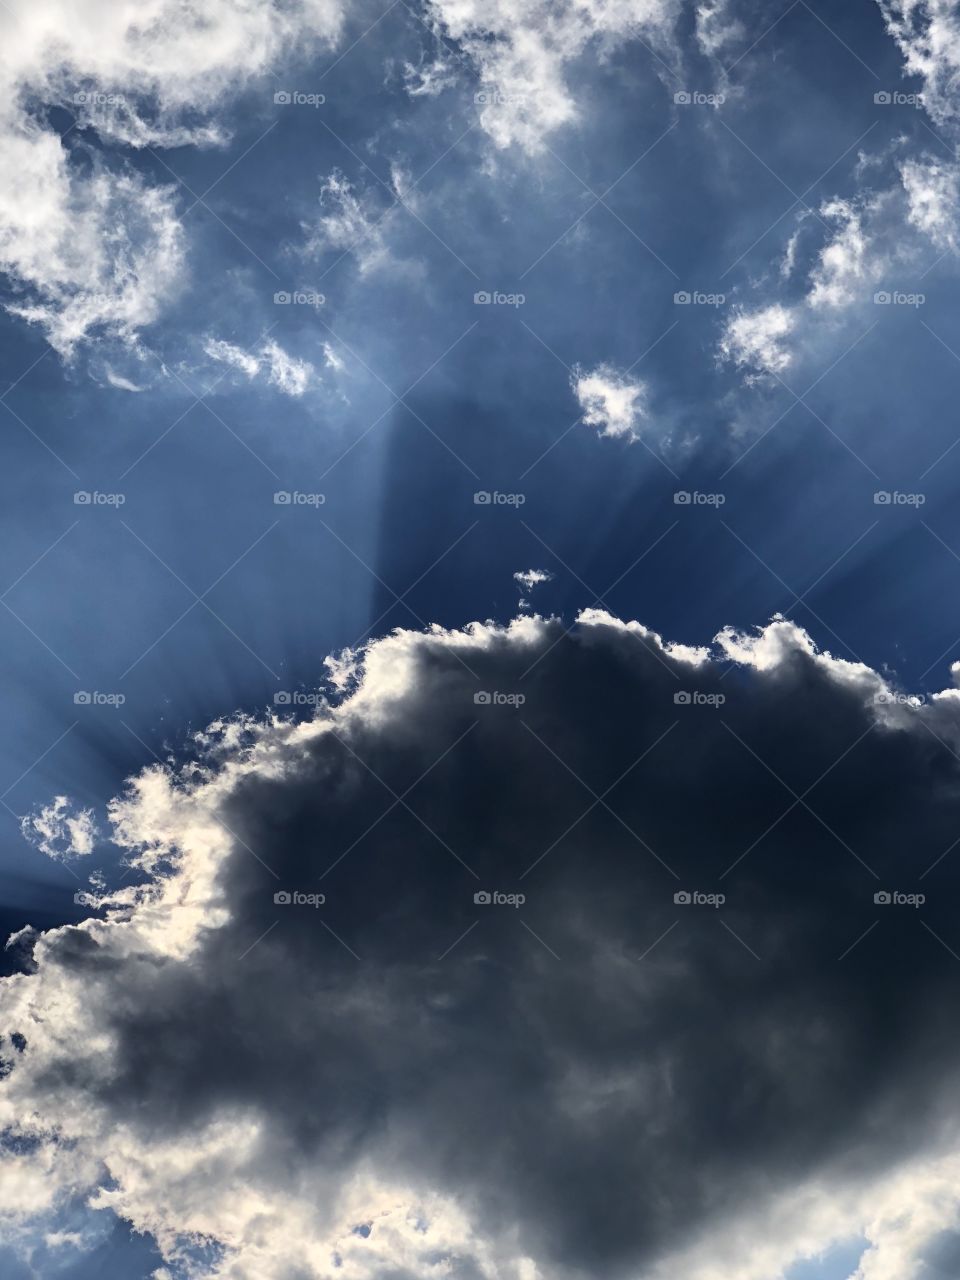 Beams on a cloud